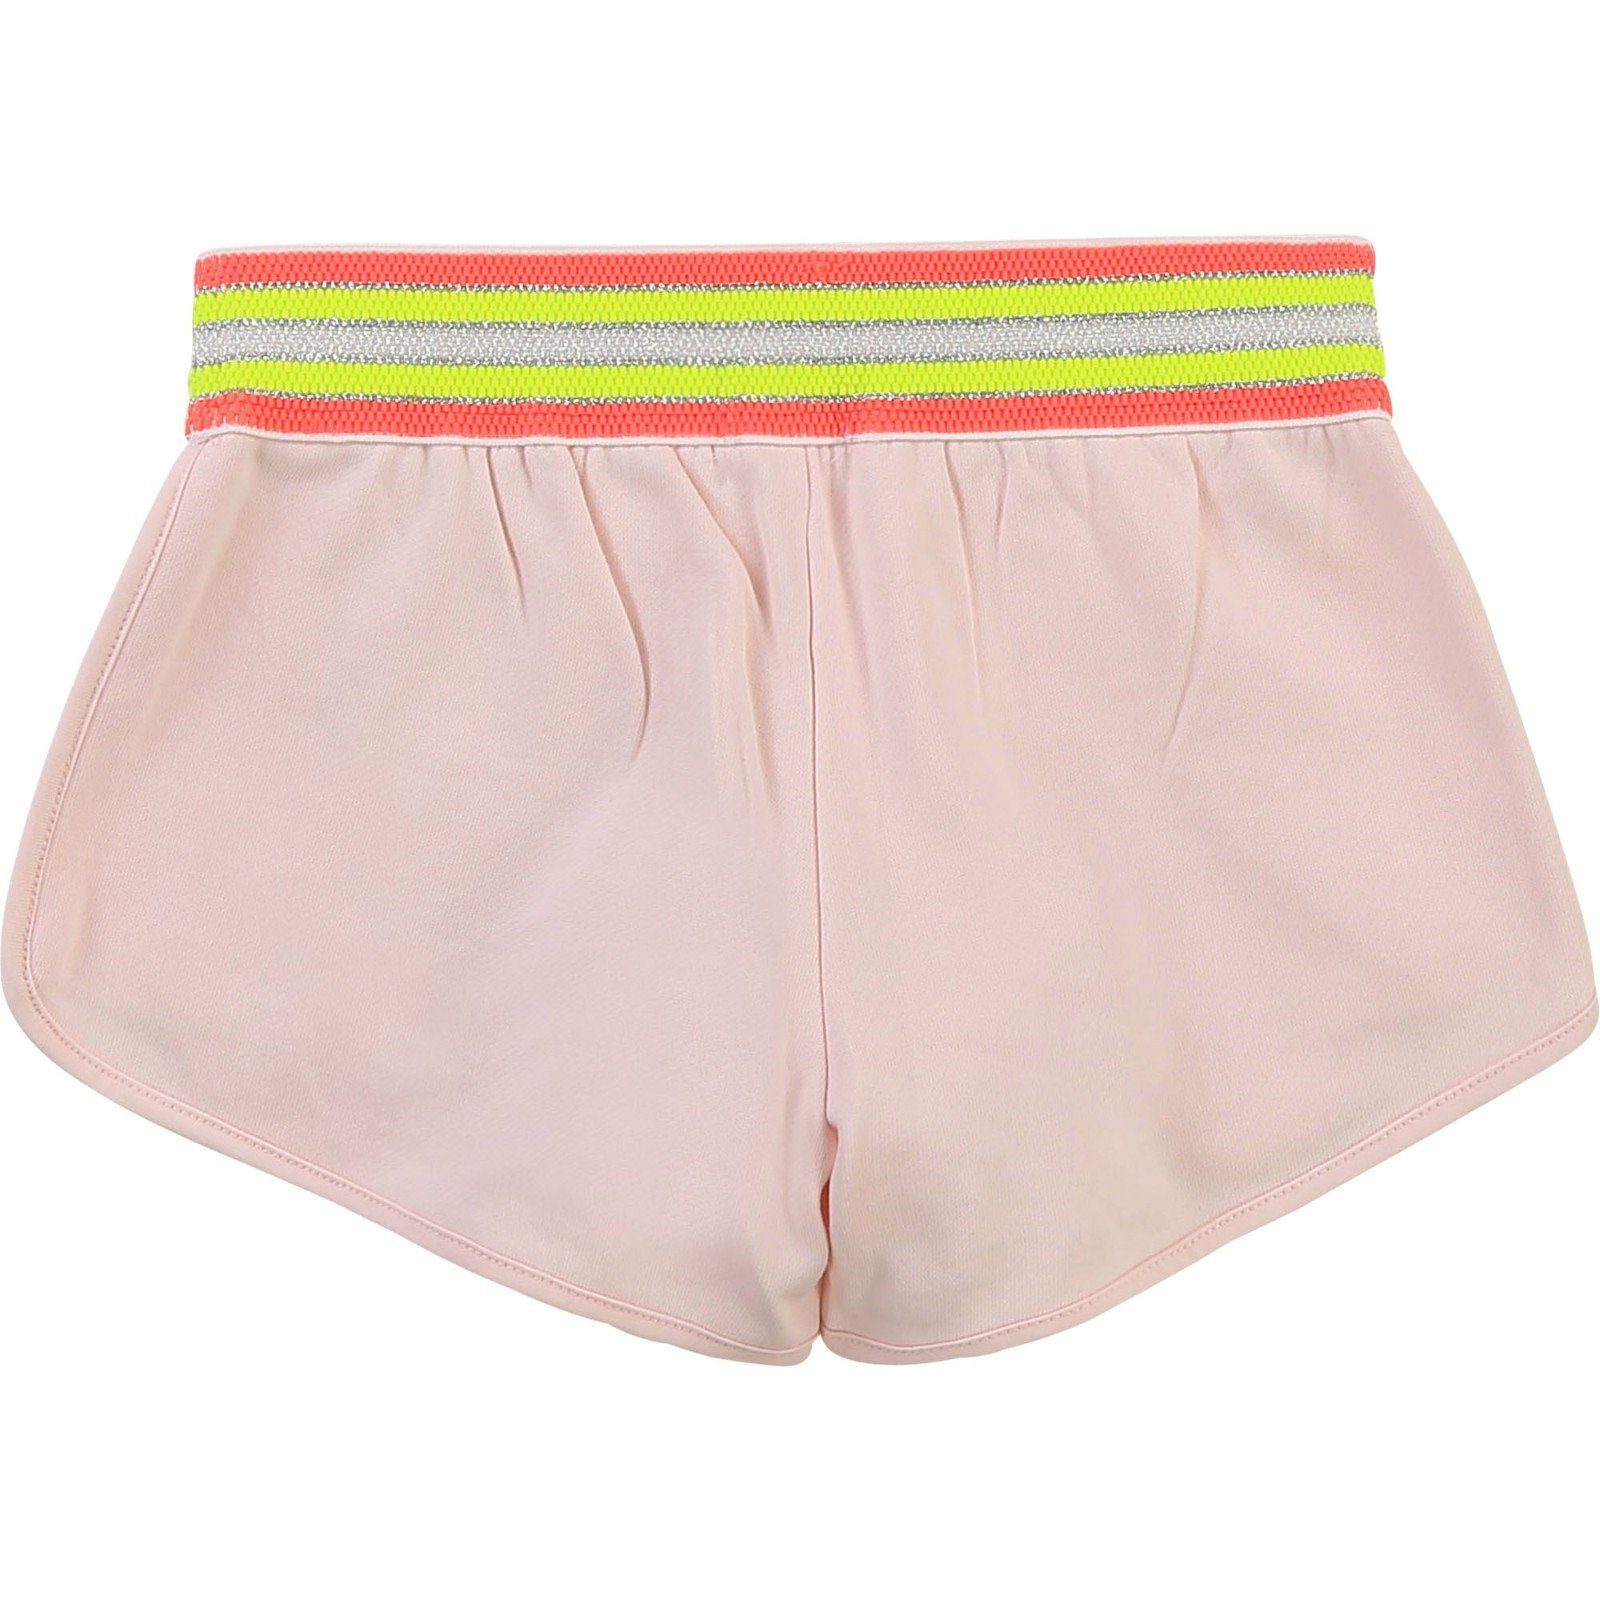 Glitzerbund Shorts Billieblush mehrfarbigem Billieblush Print mit Shorts und Sterne rosa